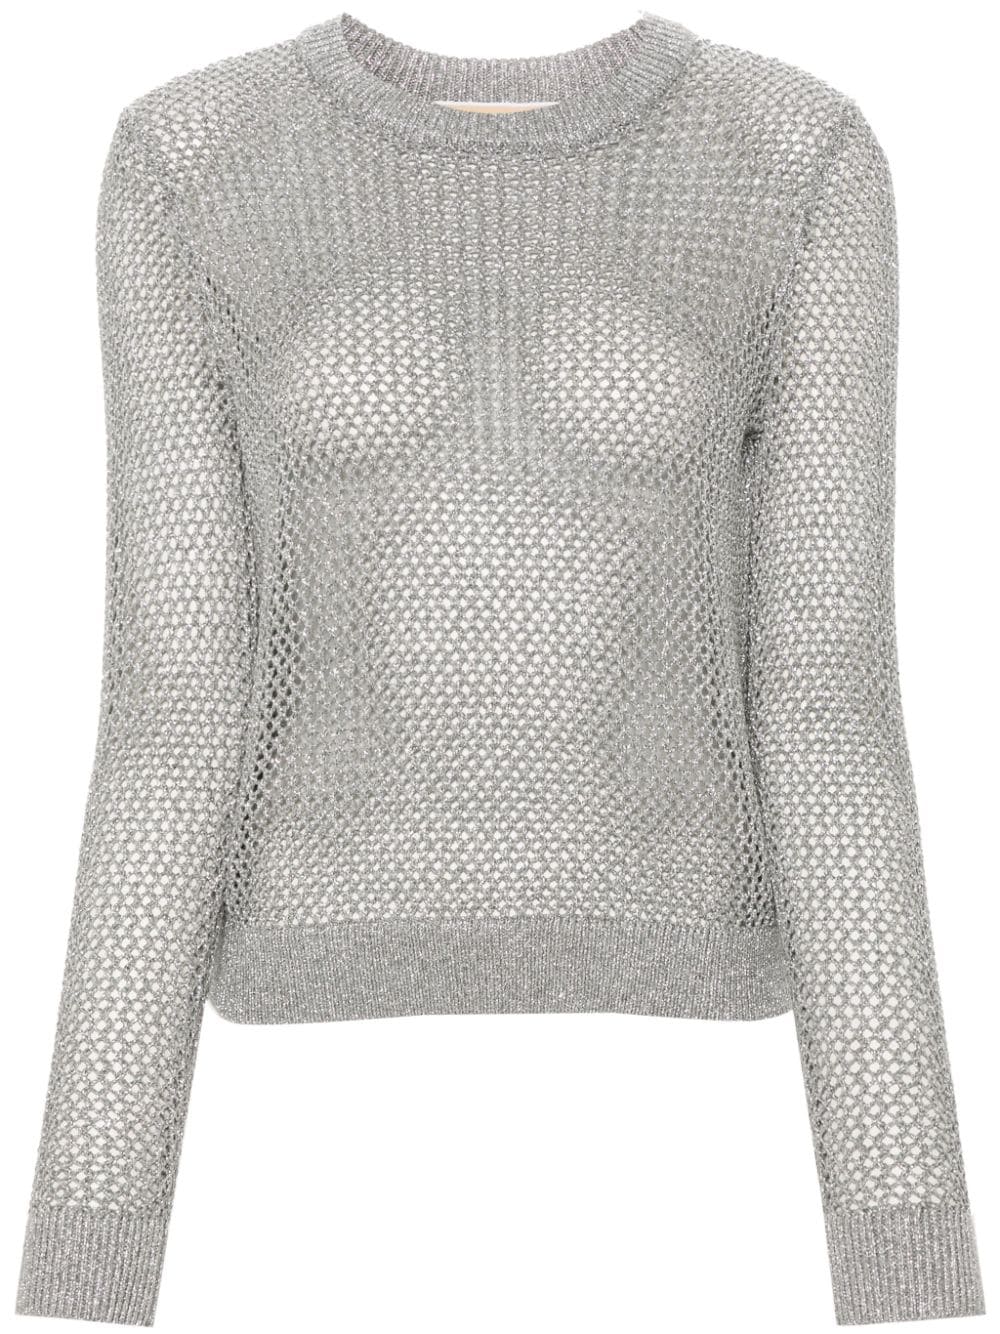 Image 1 of Michael Michael Kors metallic-threading open-knit jumper